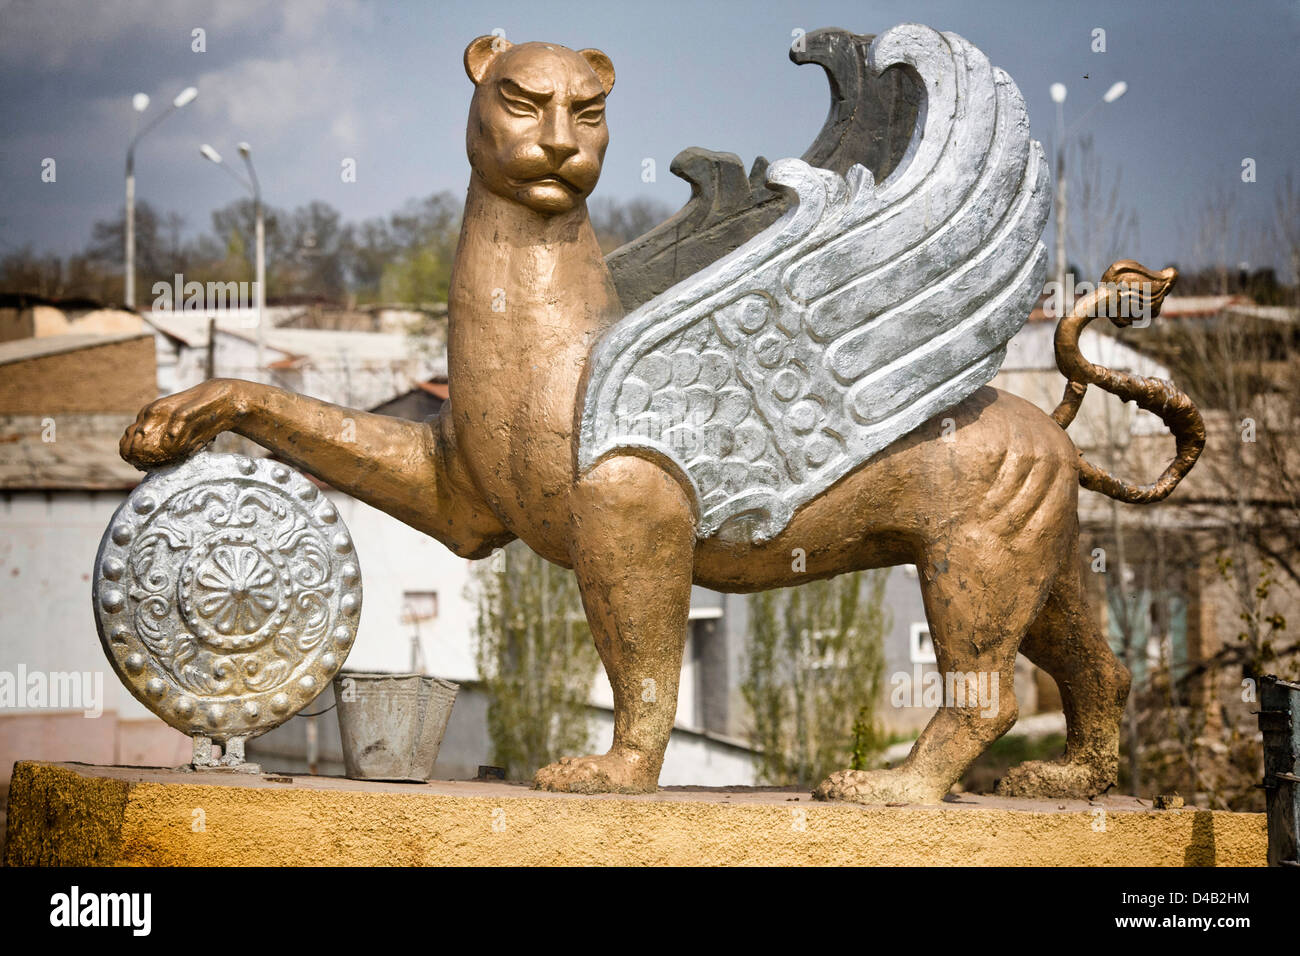 Small stone figure representing a winged tiger at David's tomb, near Samarkand Stock Photo